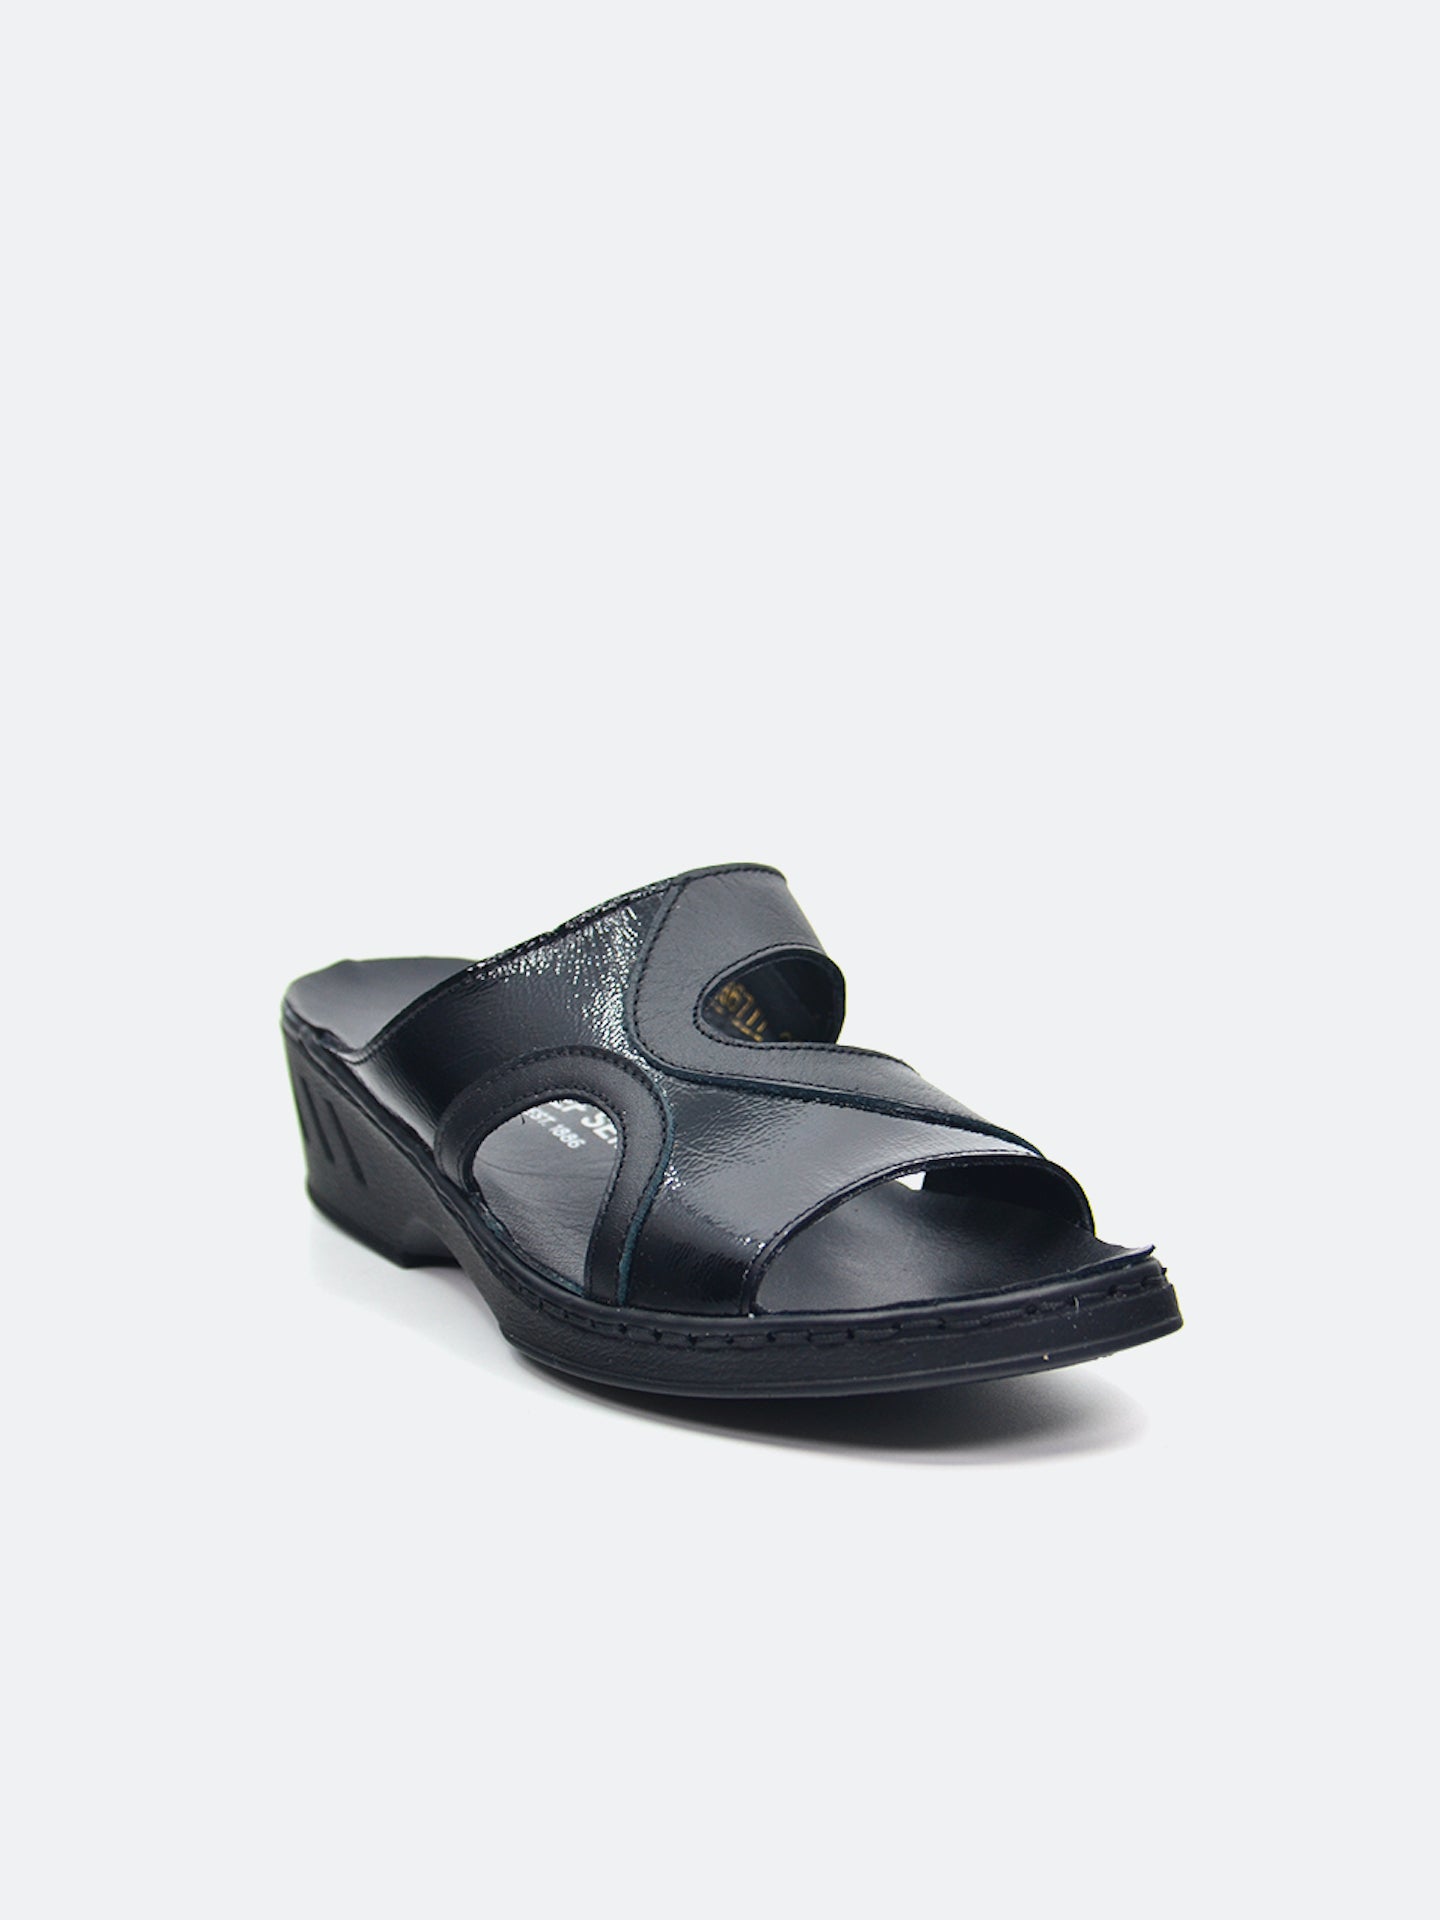 Josef Seibel Women's Flat Sandals #color_Black